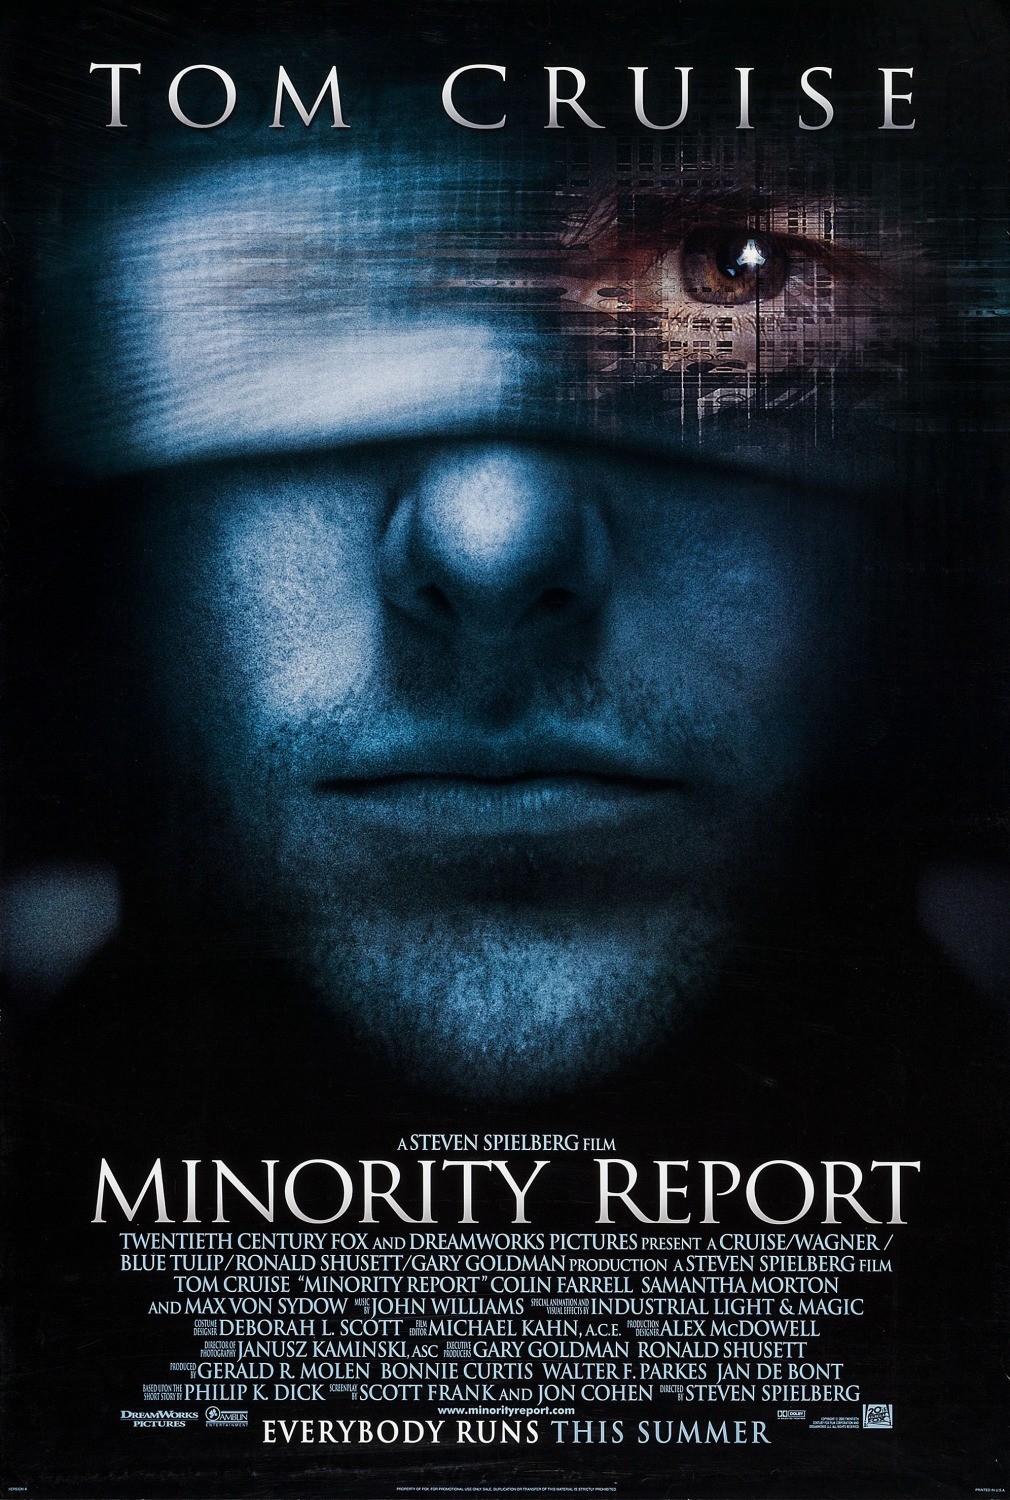 MINORITY REPORT